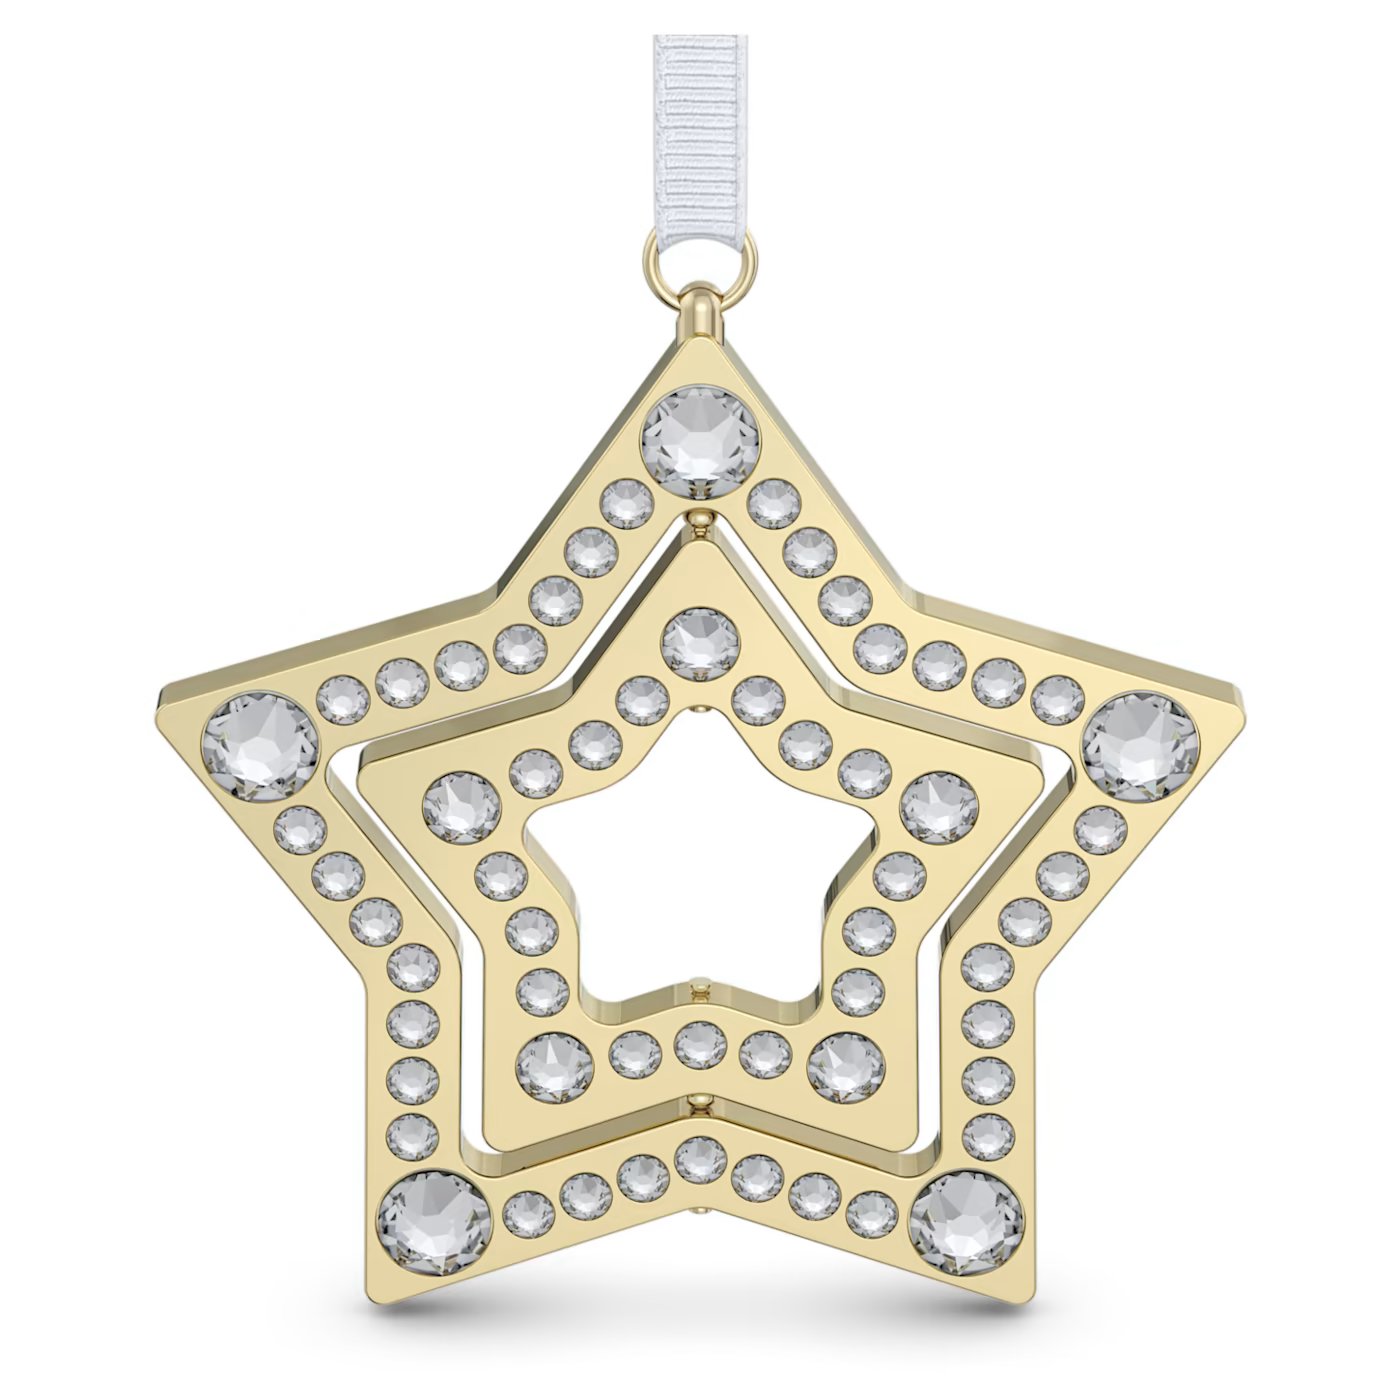 Holiday Magic Star Ornament